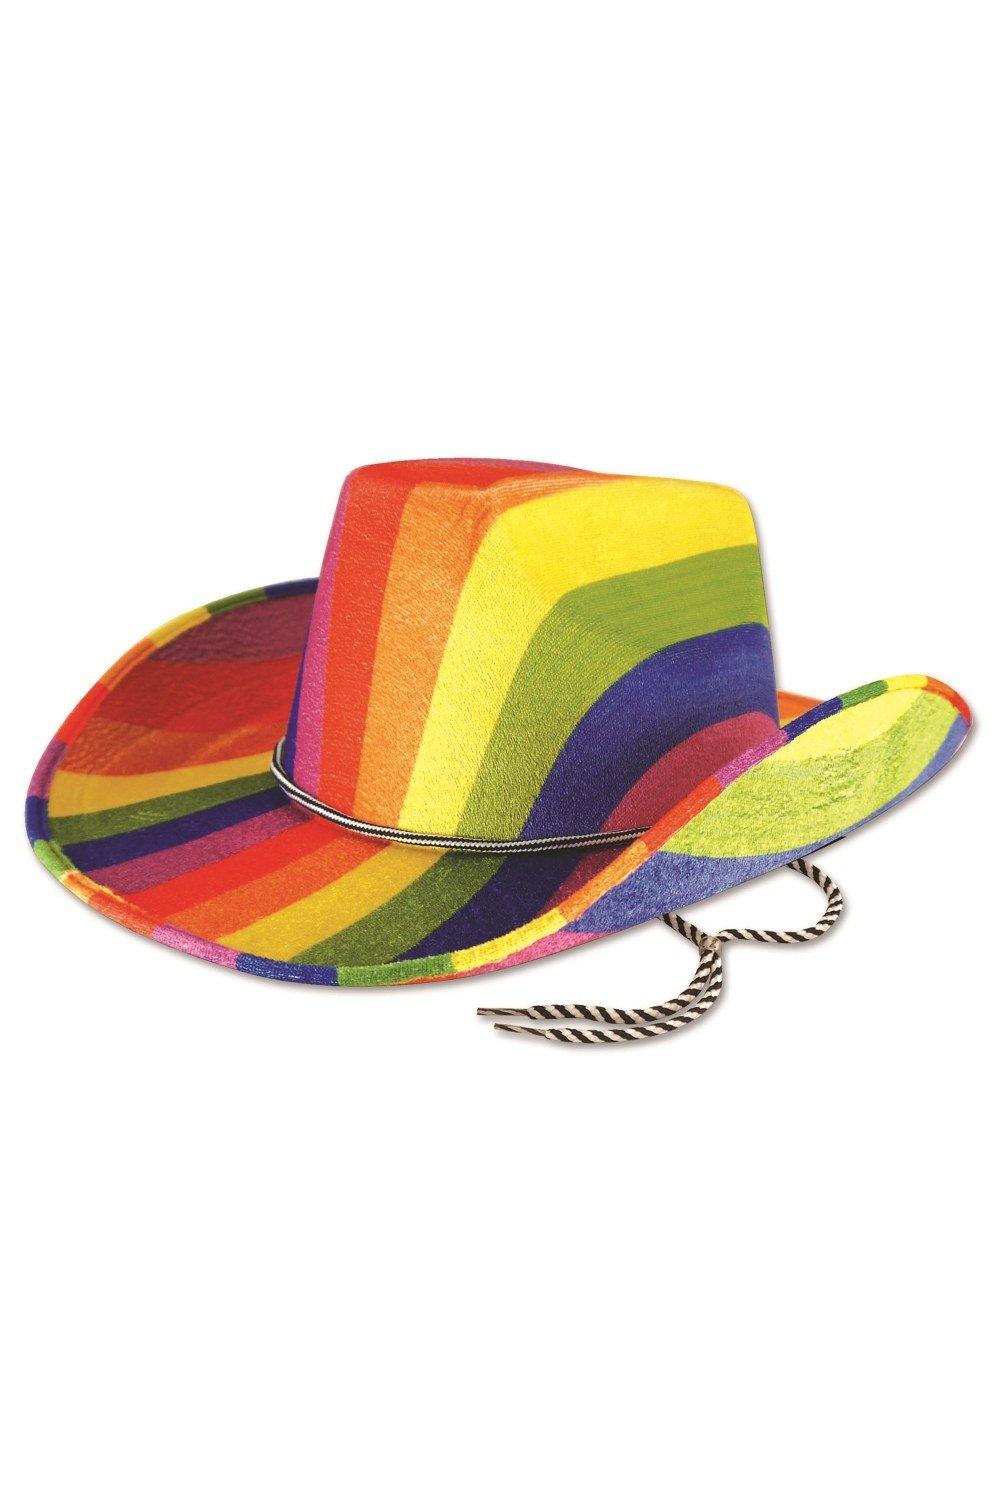 Bristol Novelty Rainbow Cowboy Hat